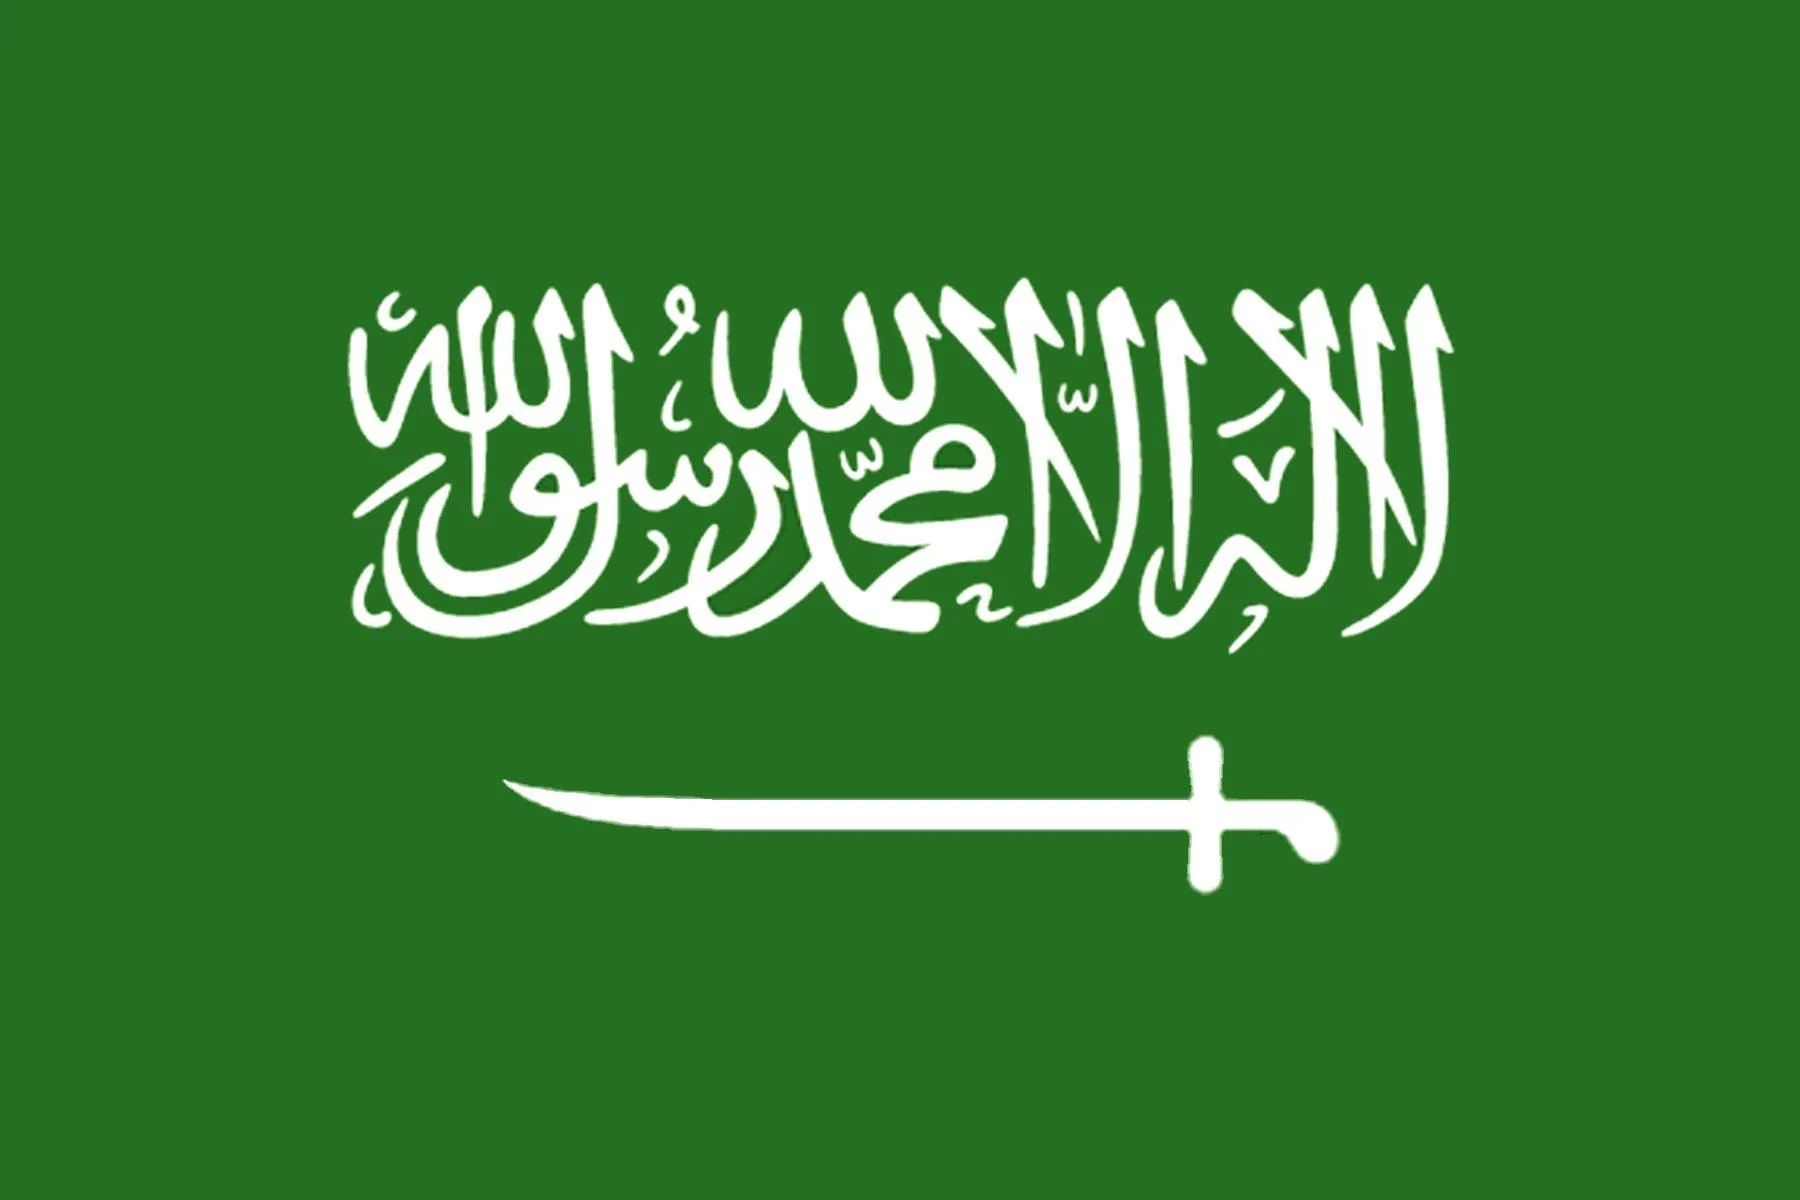 Suudi Arabistannnnn